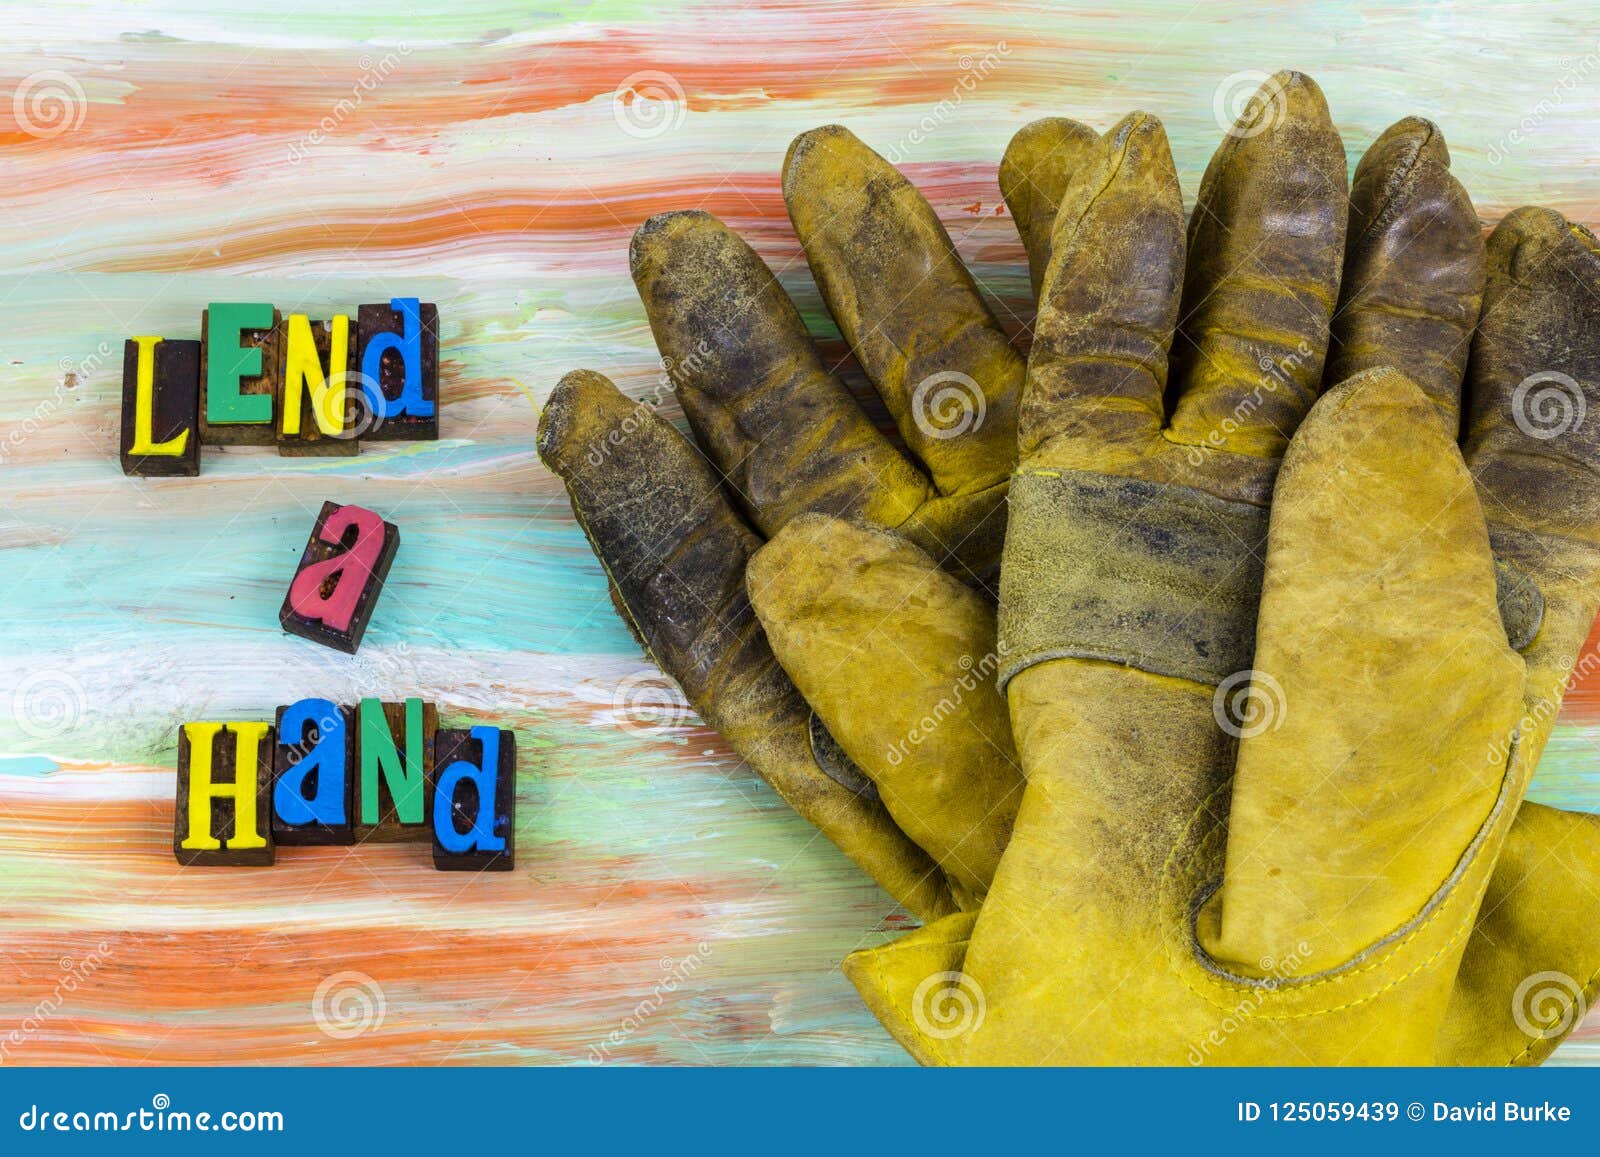 lend helping hand gloves volunteer labor